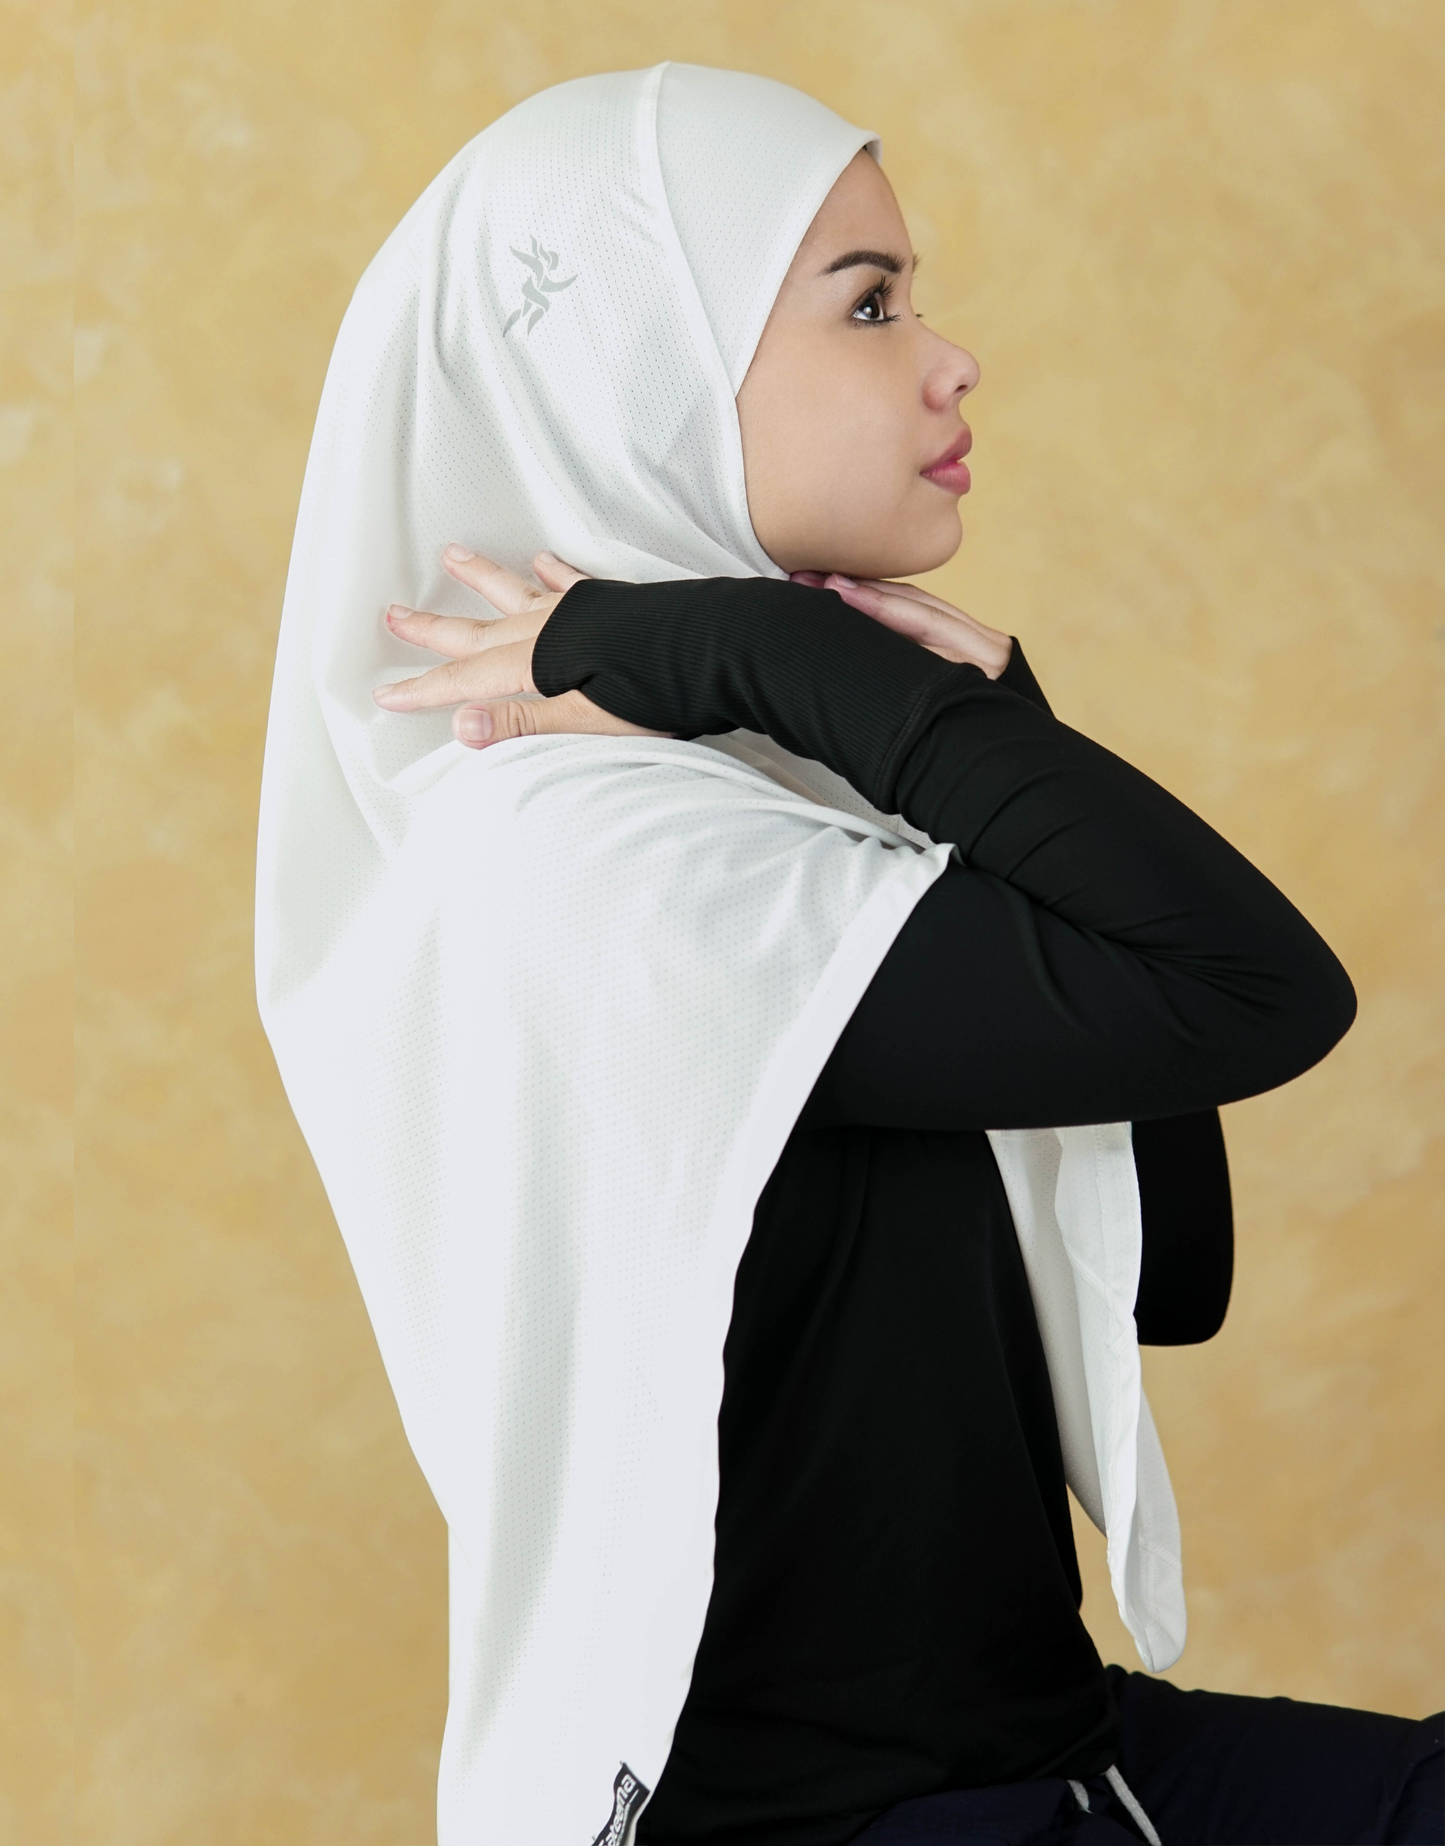 Swift Sports Hijab - Large